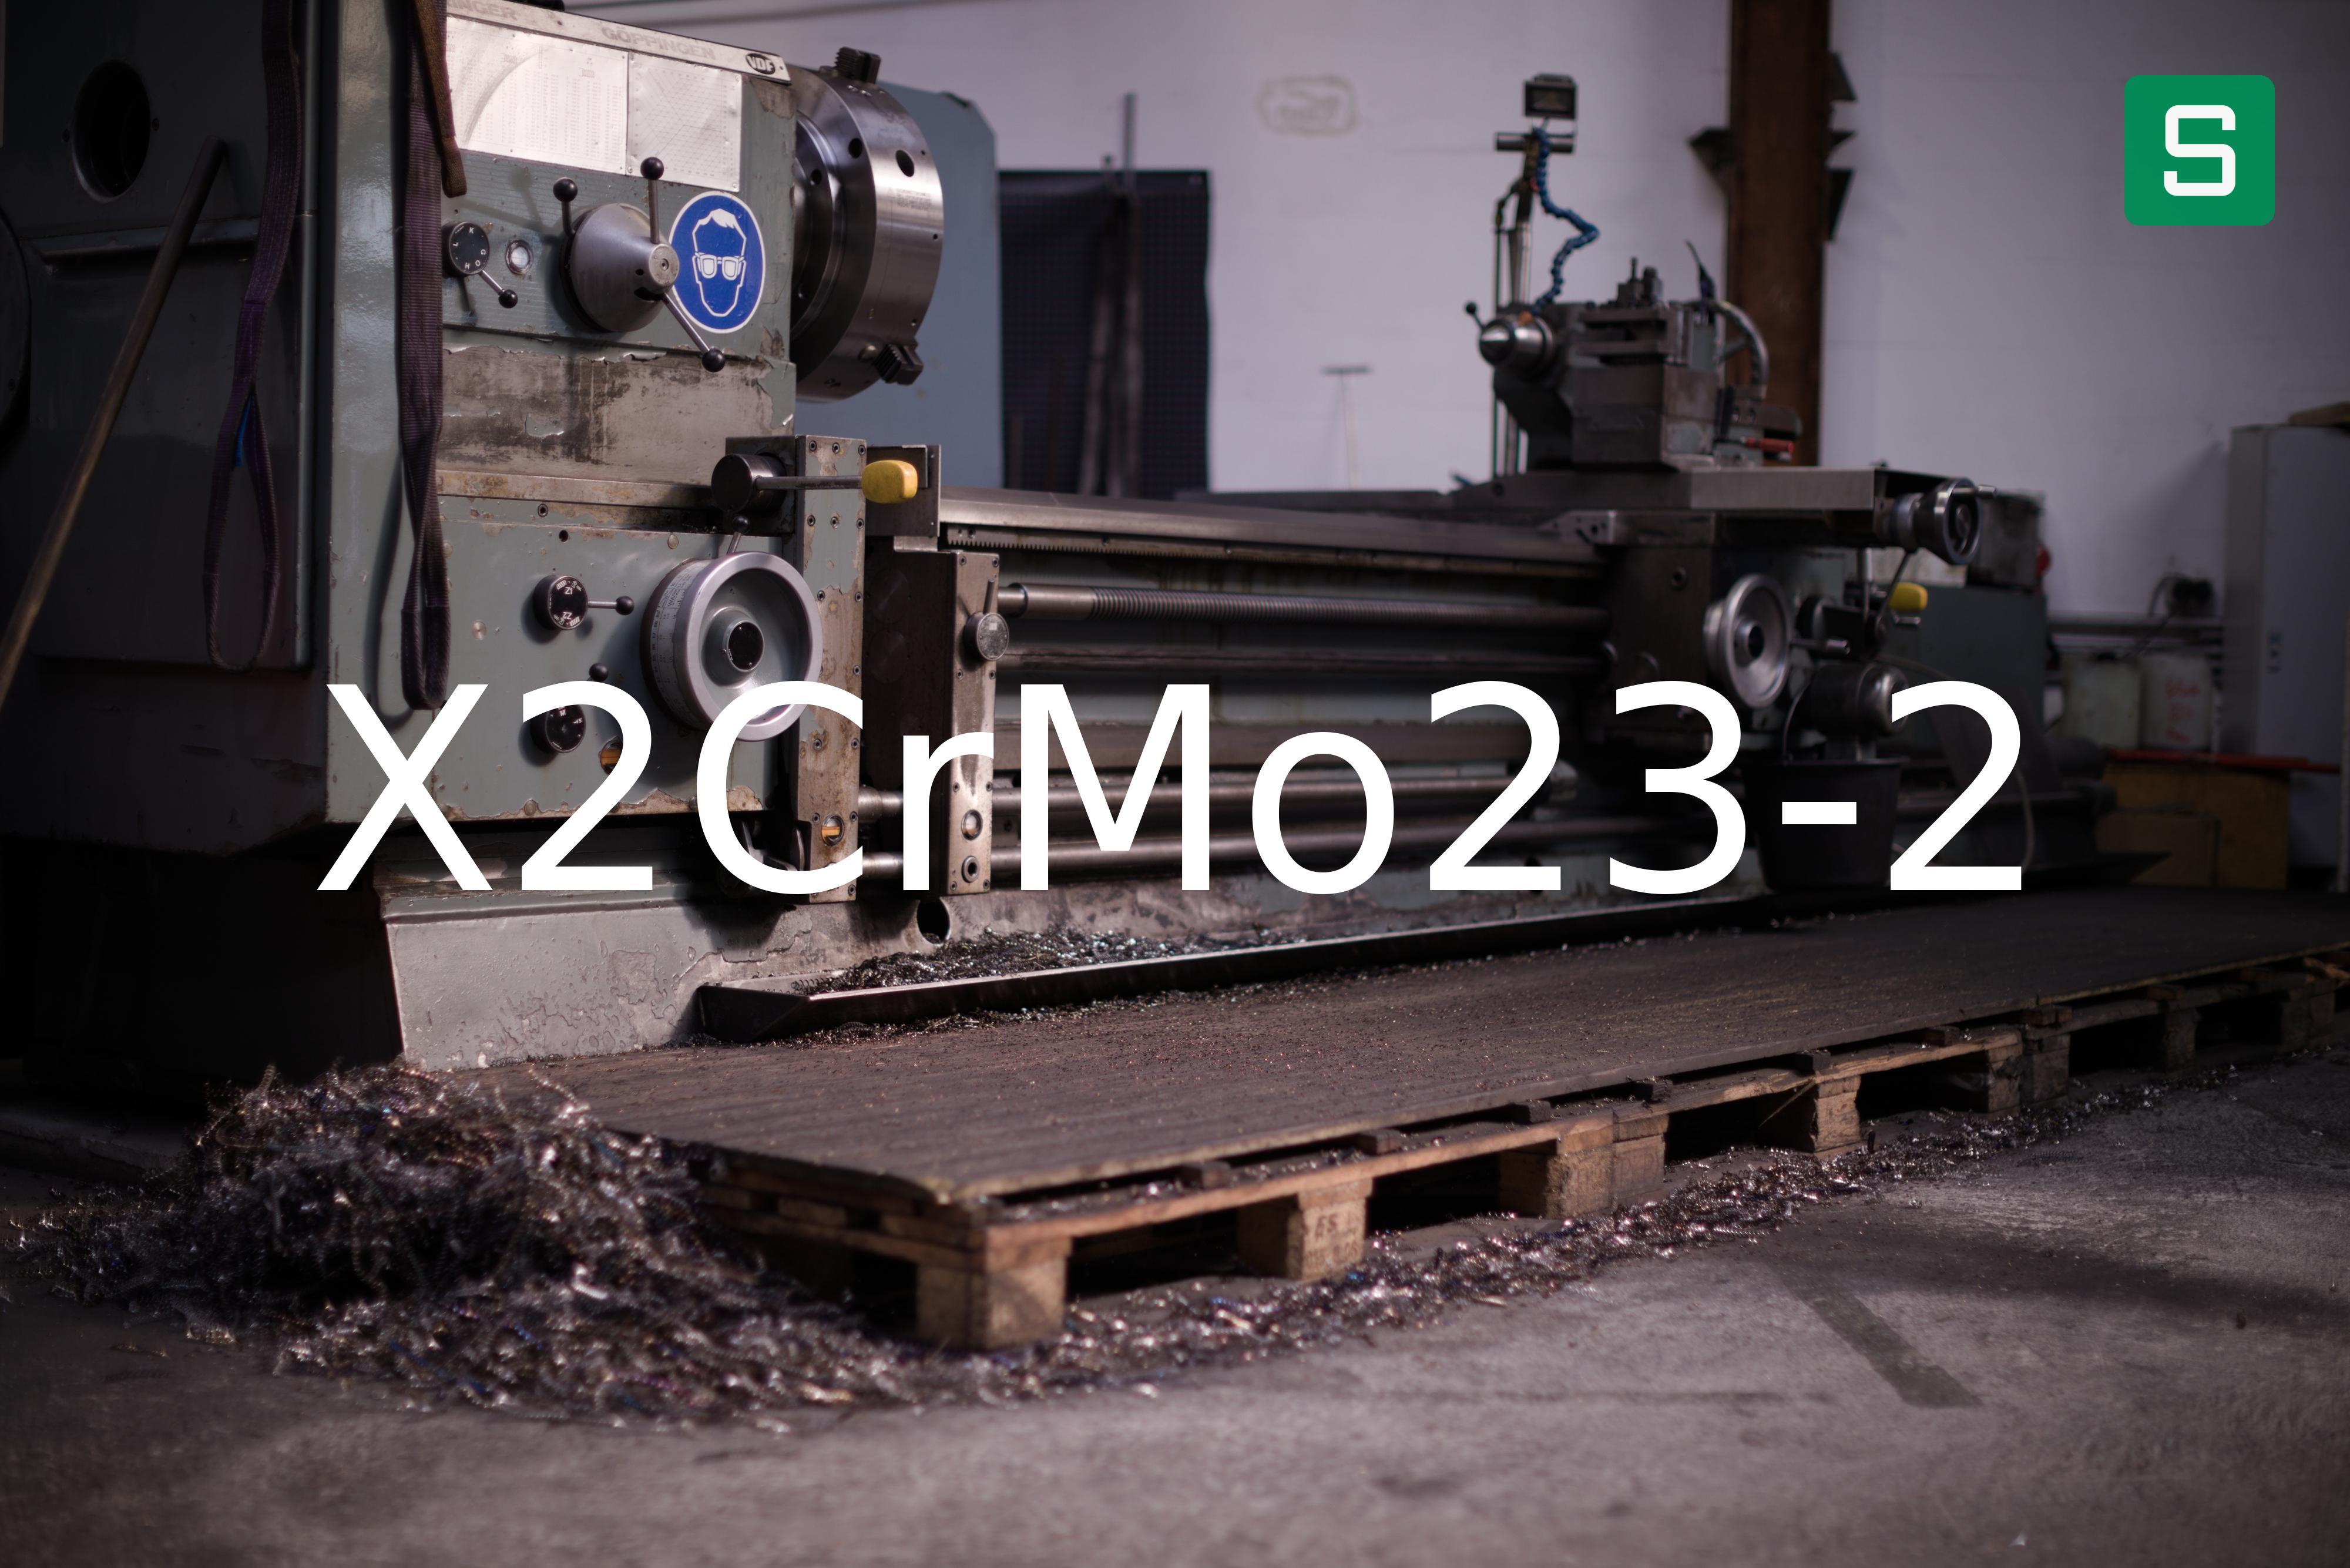 Steel Material: X2CrMo23-2